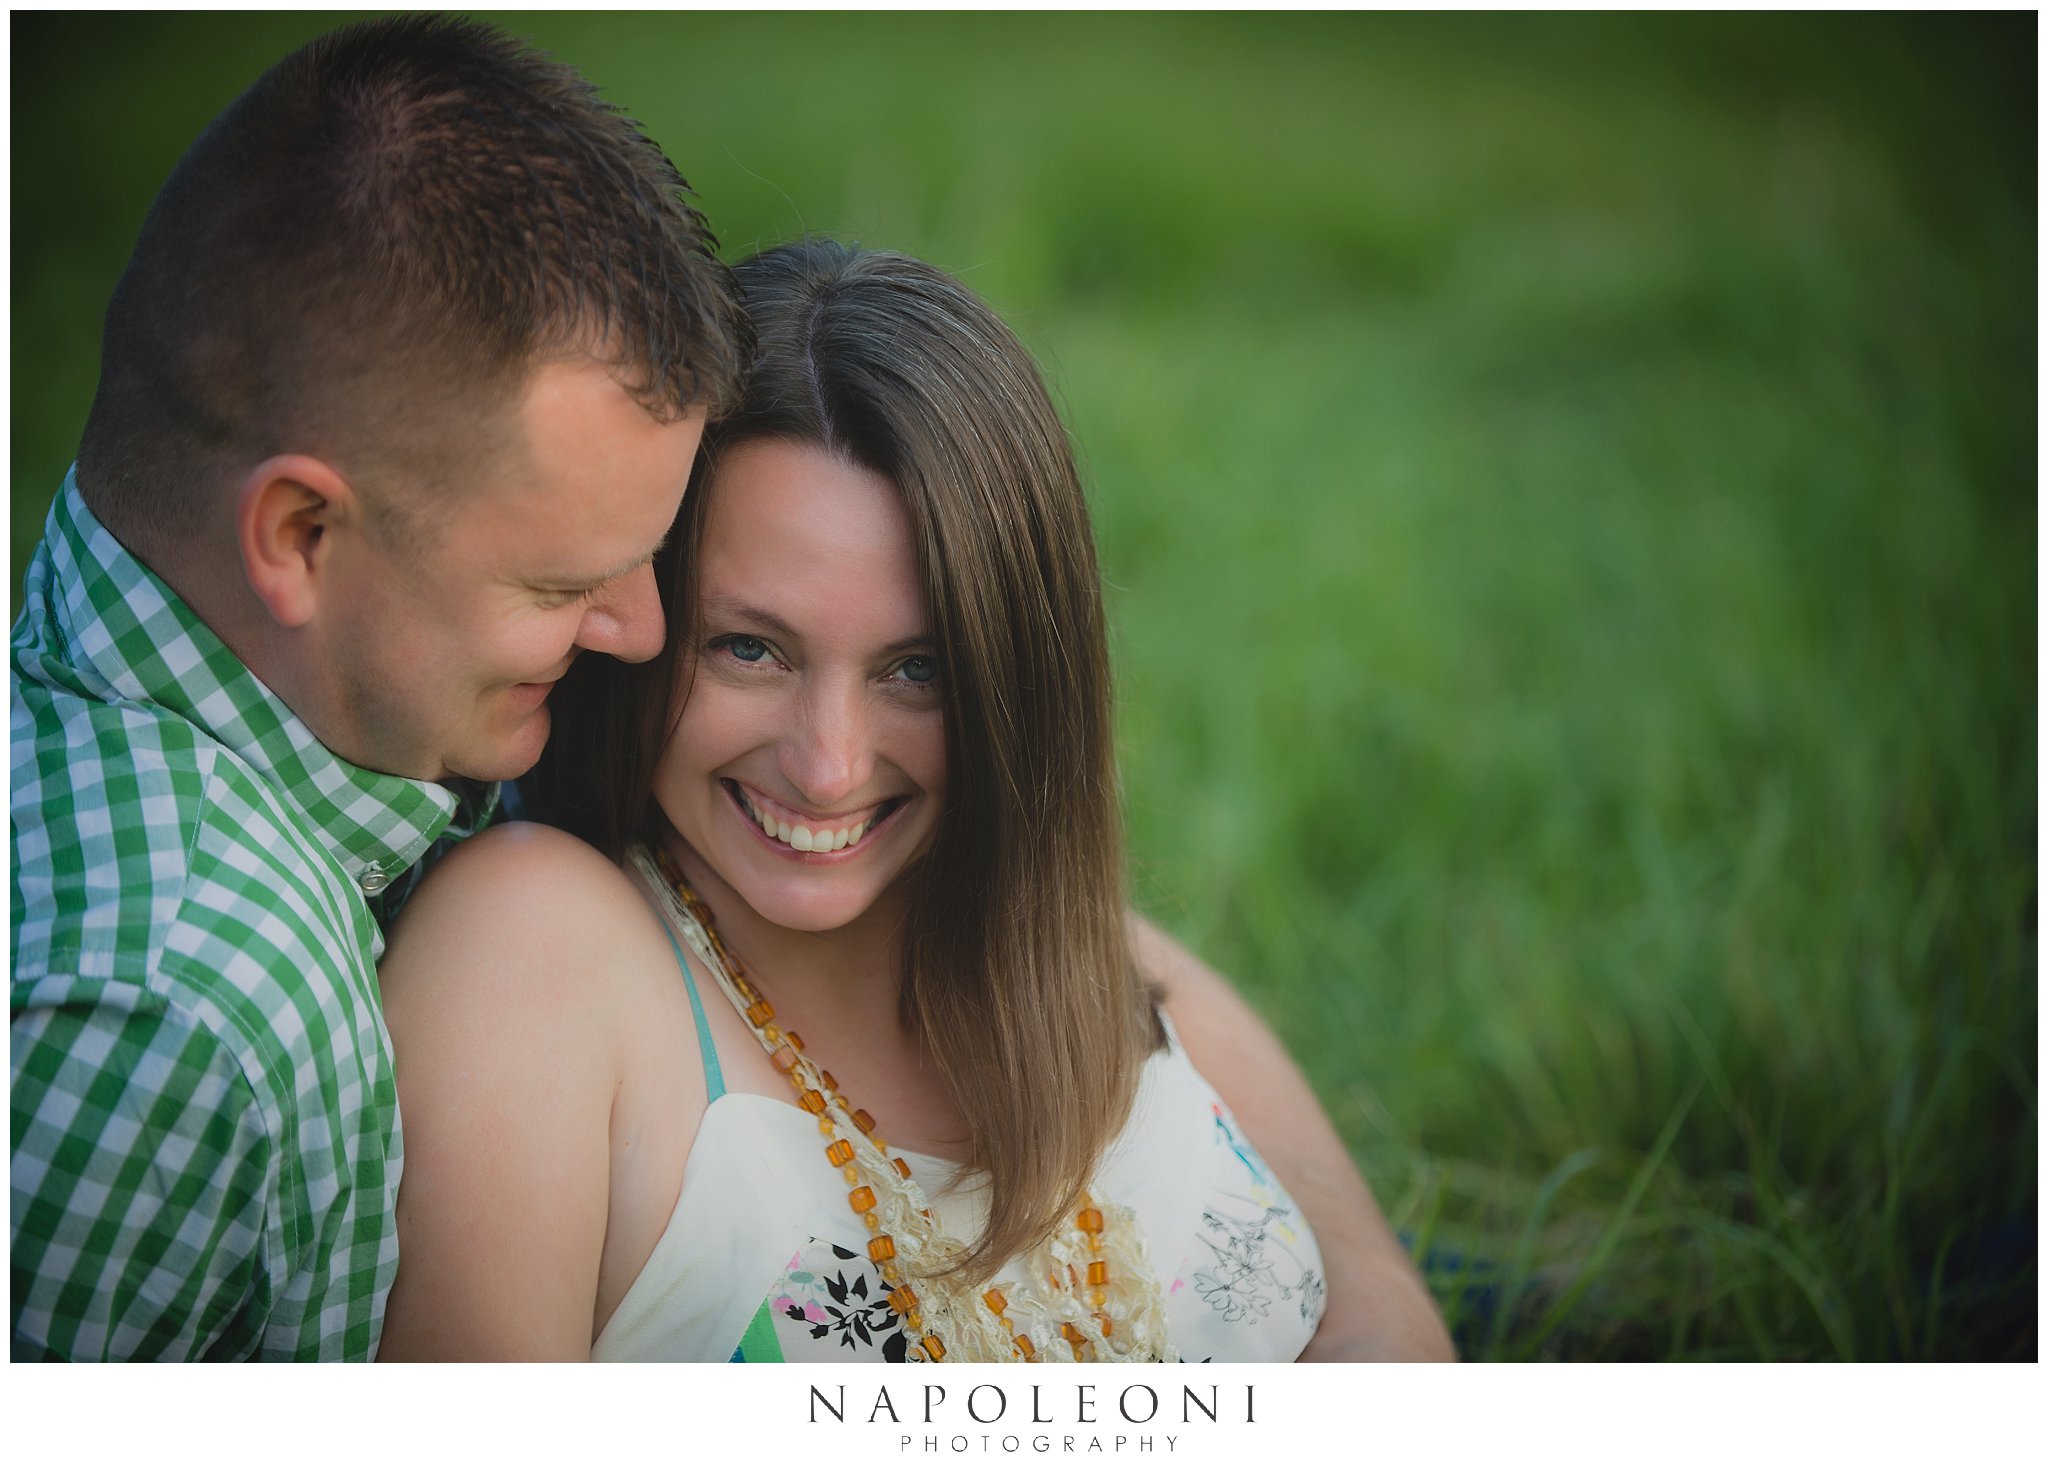 Couples/Engagement Photos